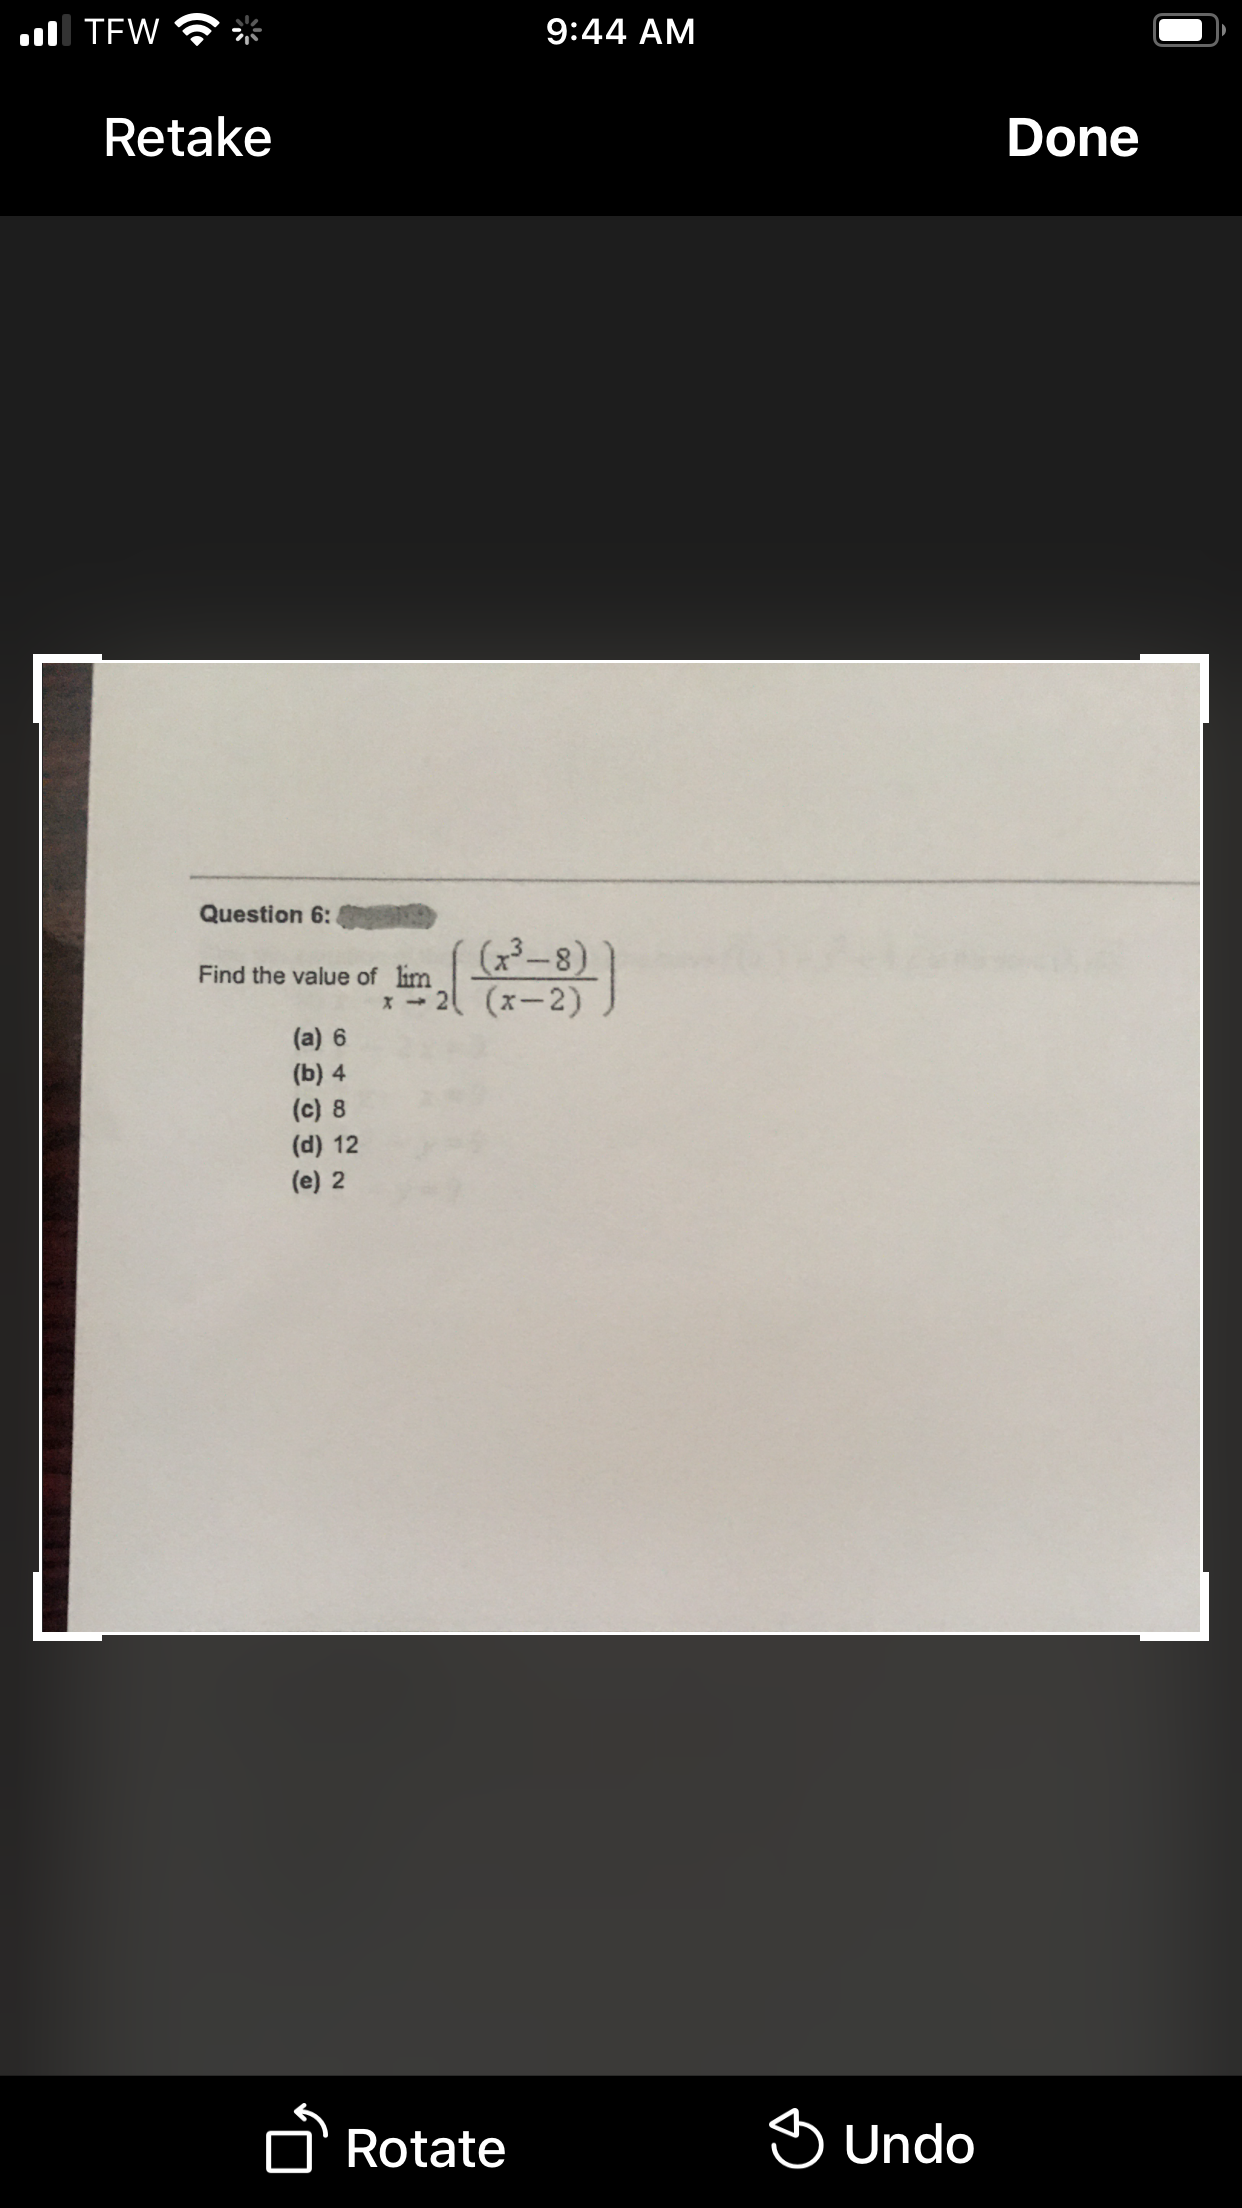 ul TEW
9:44 AM
Retake
Done
Question 6:
(x3-8)
(x-2)
Find the value of lim
(a) 6
(b) 4
(c) 8
(d) 12
(e) 2
DRotate
S Undo
